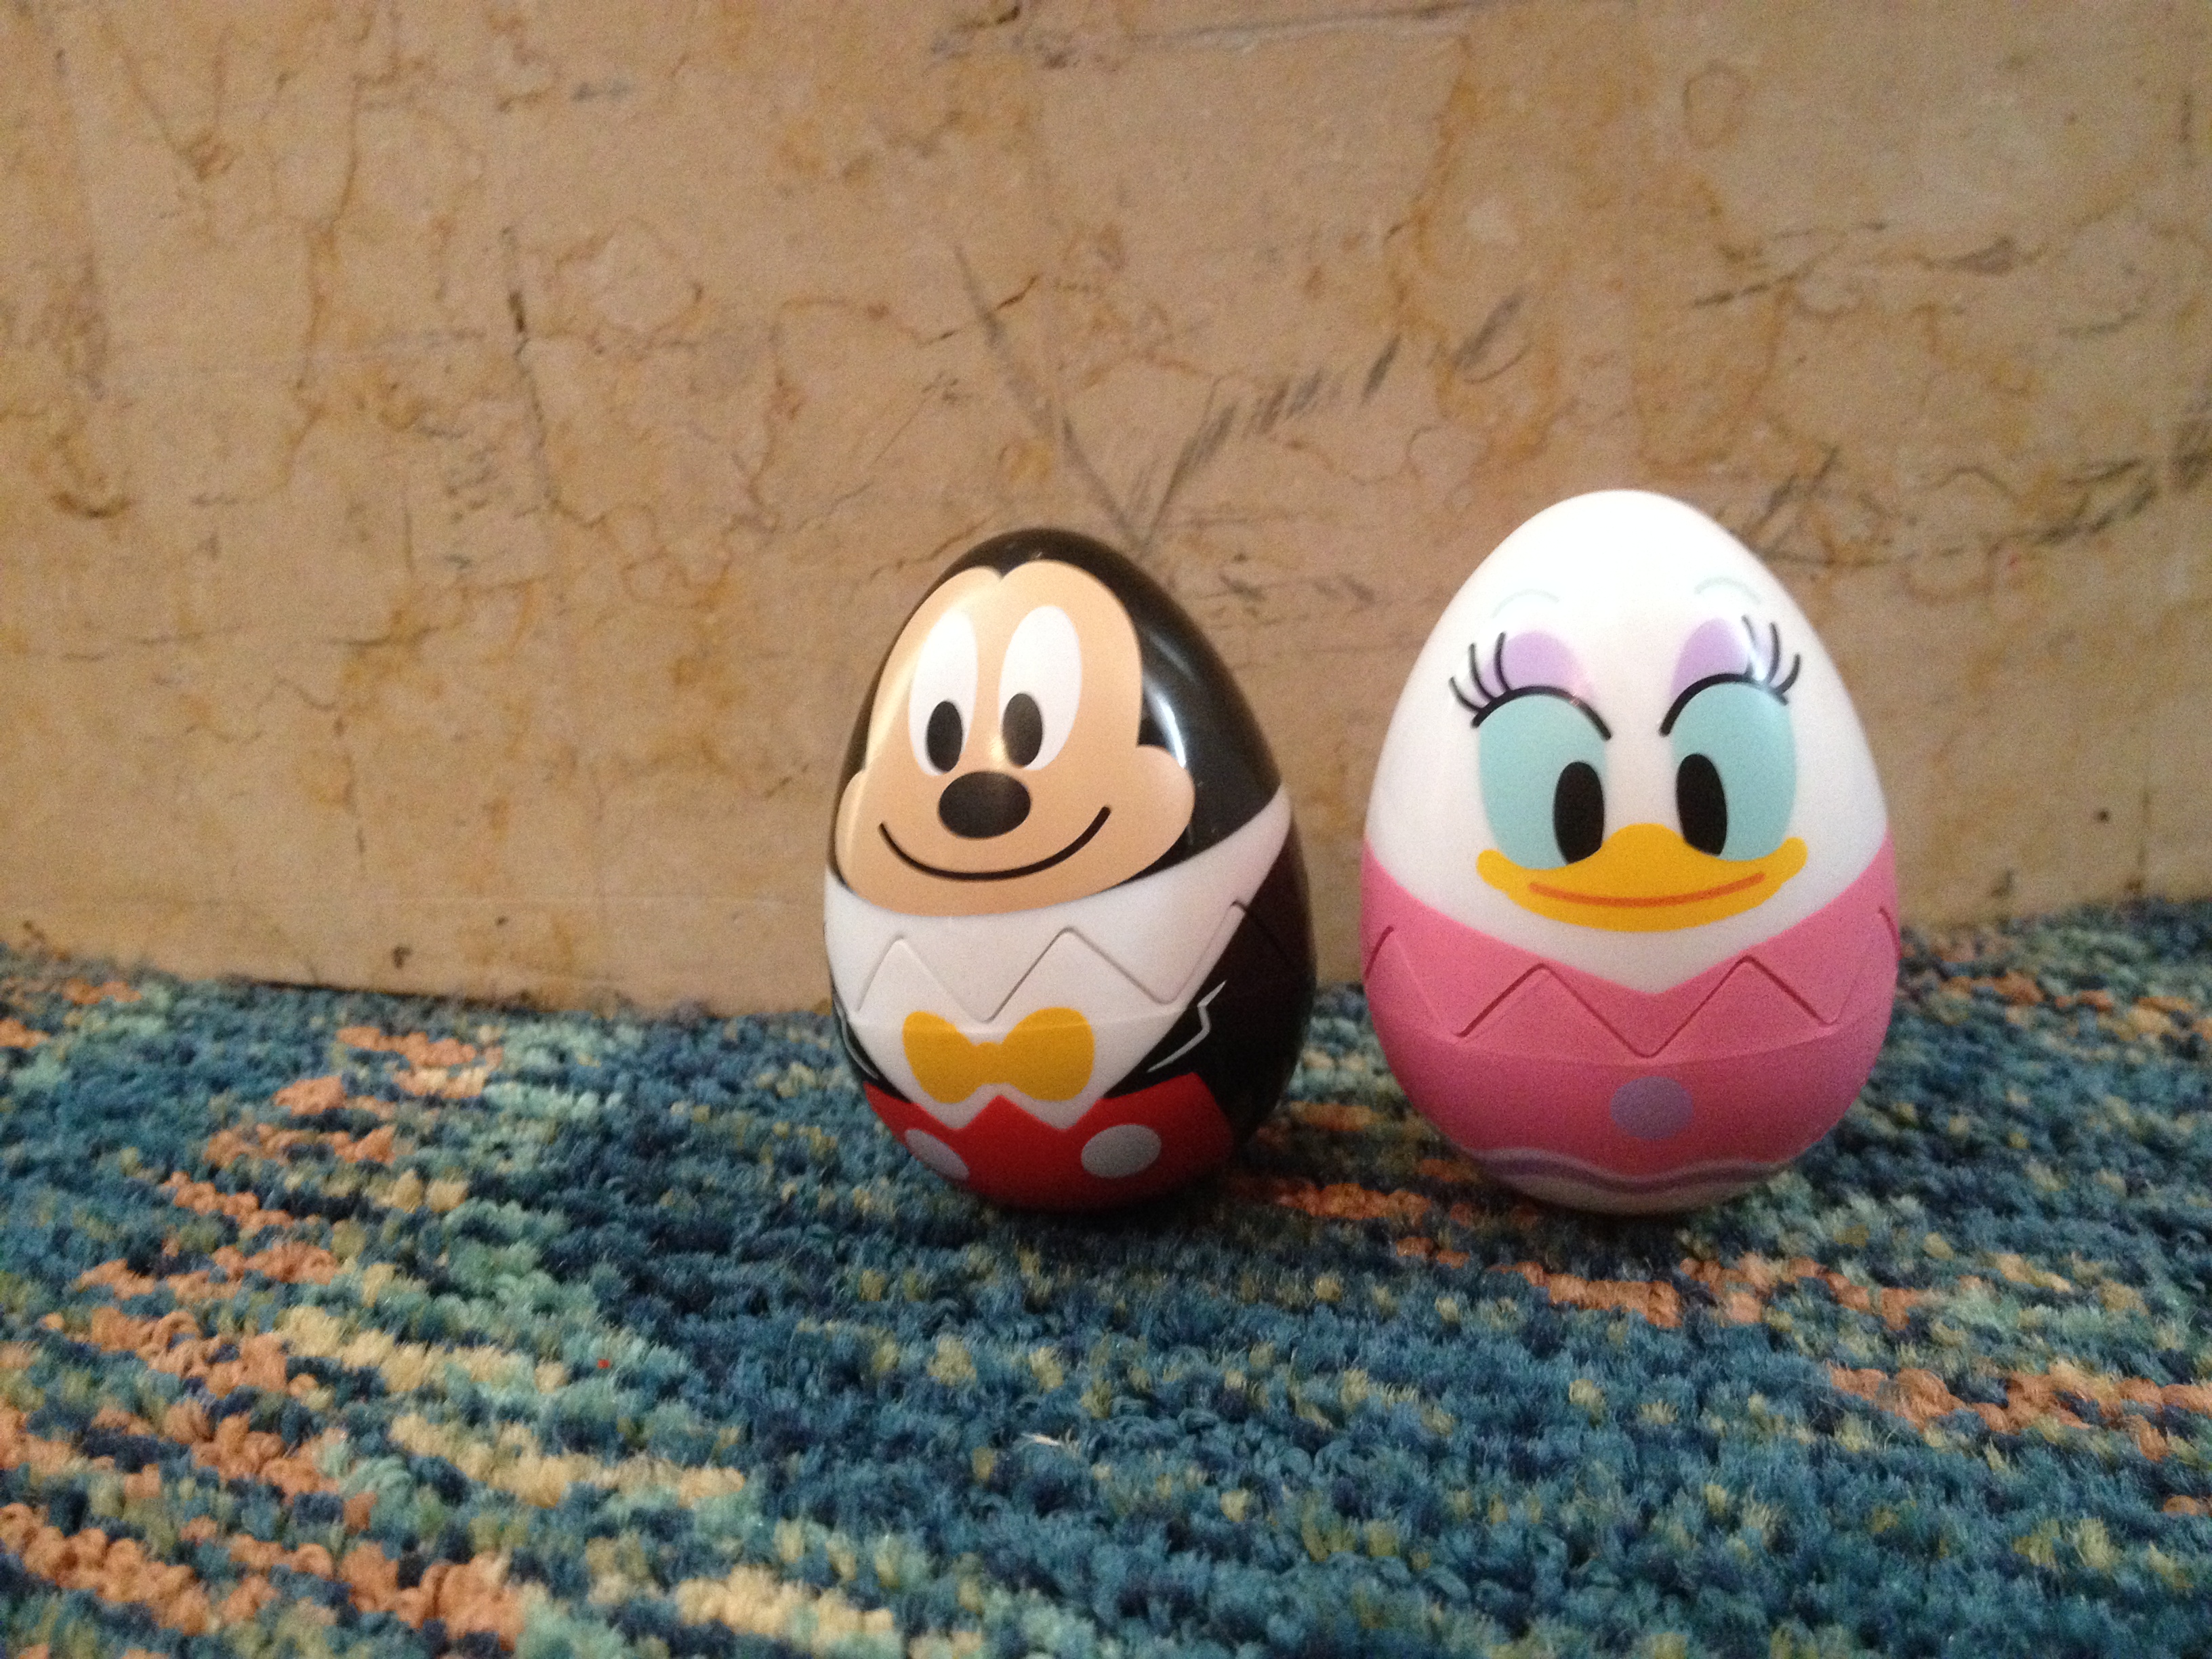 Egg-Stravaganza at Both Walt Disney World and Disneyland Resorts